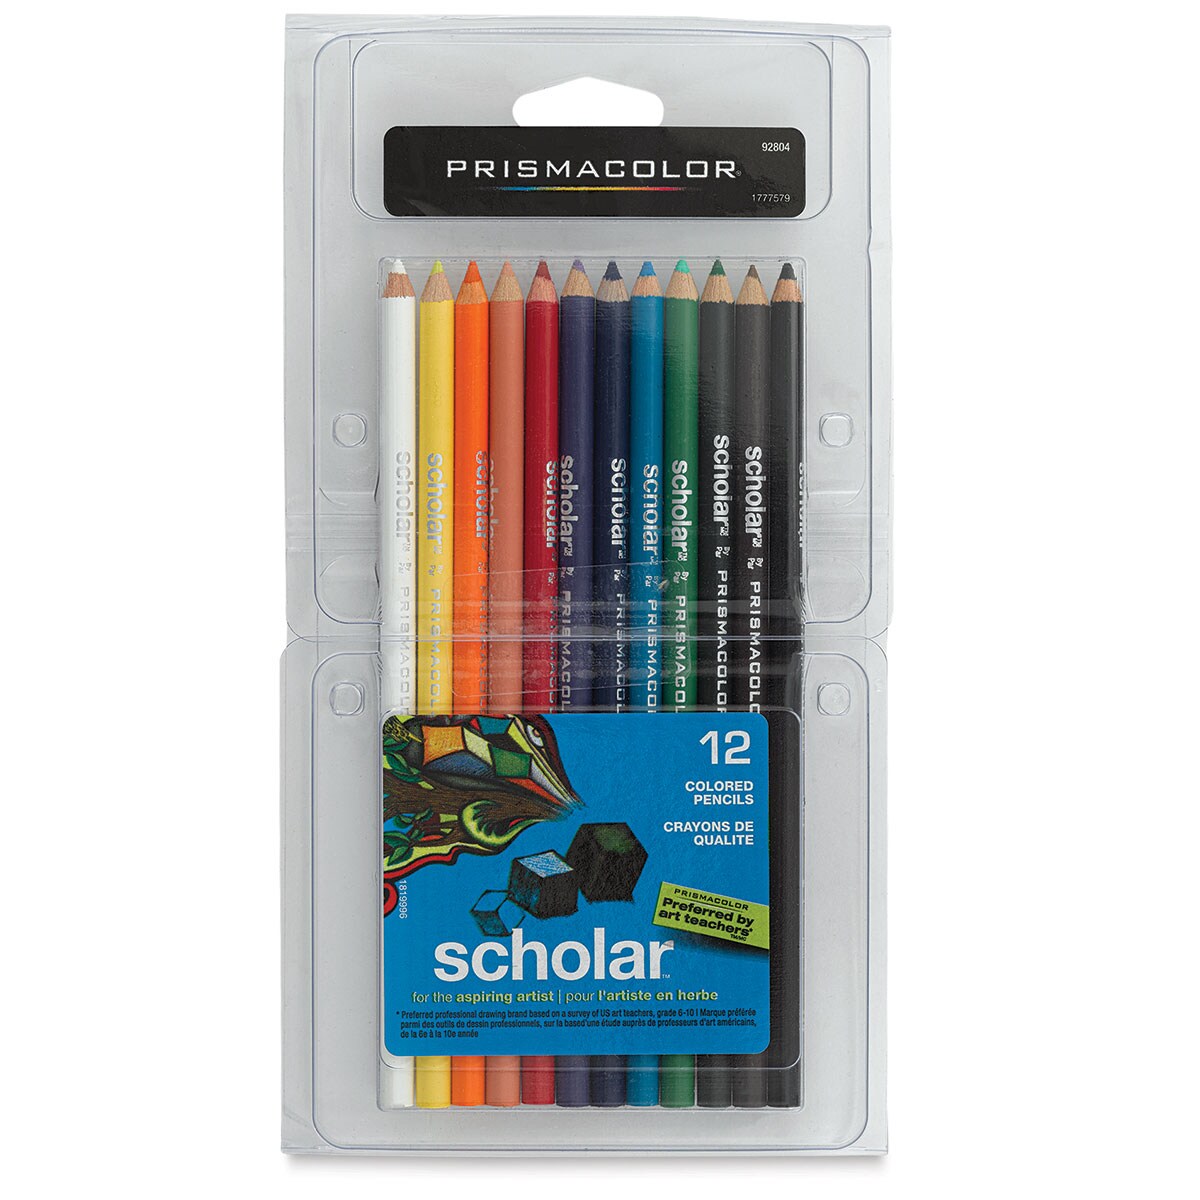 Prismacolor Premier Watercolor Pencils, Set of 12 Assorted Colors New In  Box